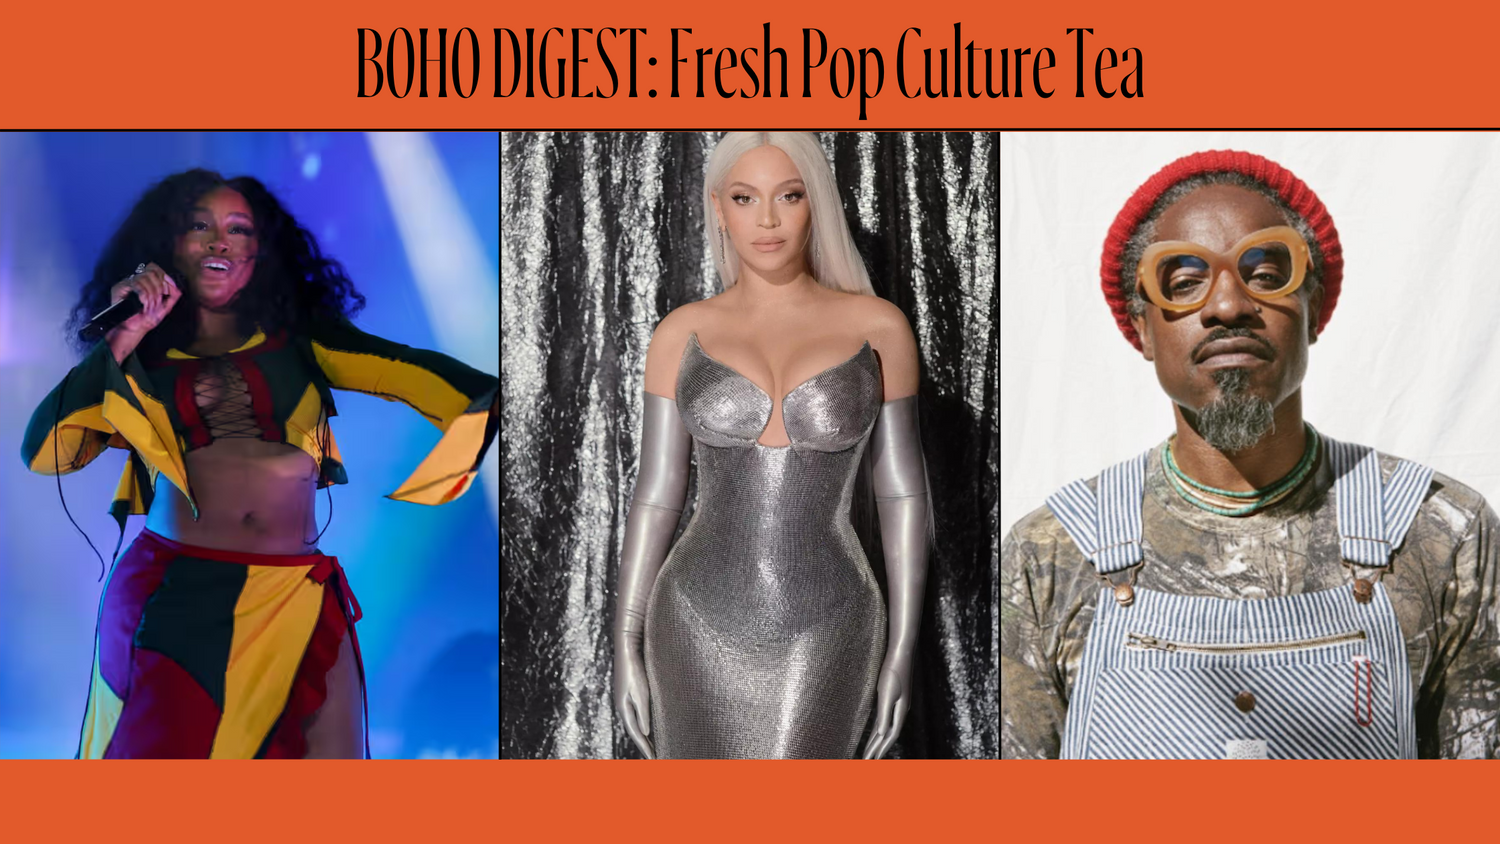 BOHO DIGEST: Fresh Pop Culture Tea